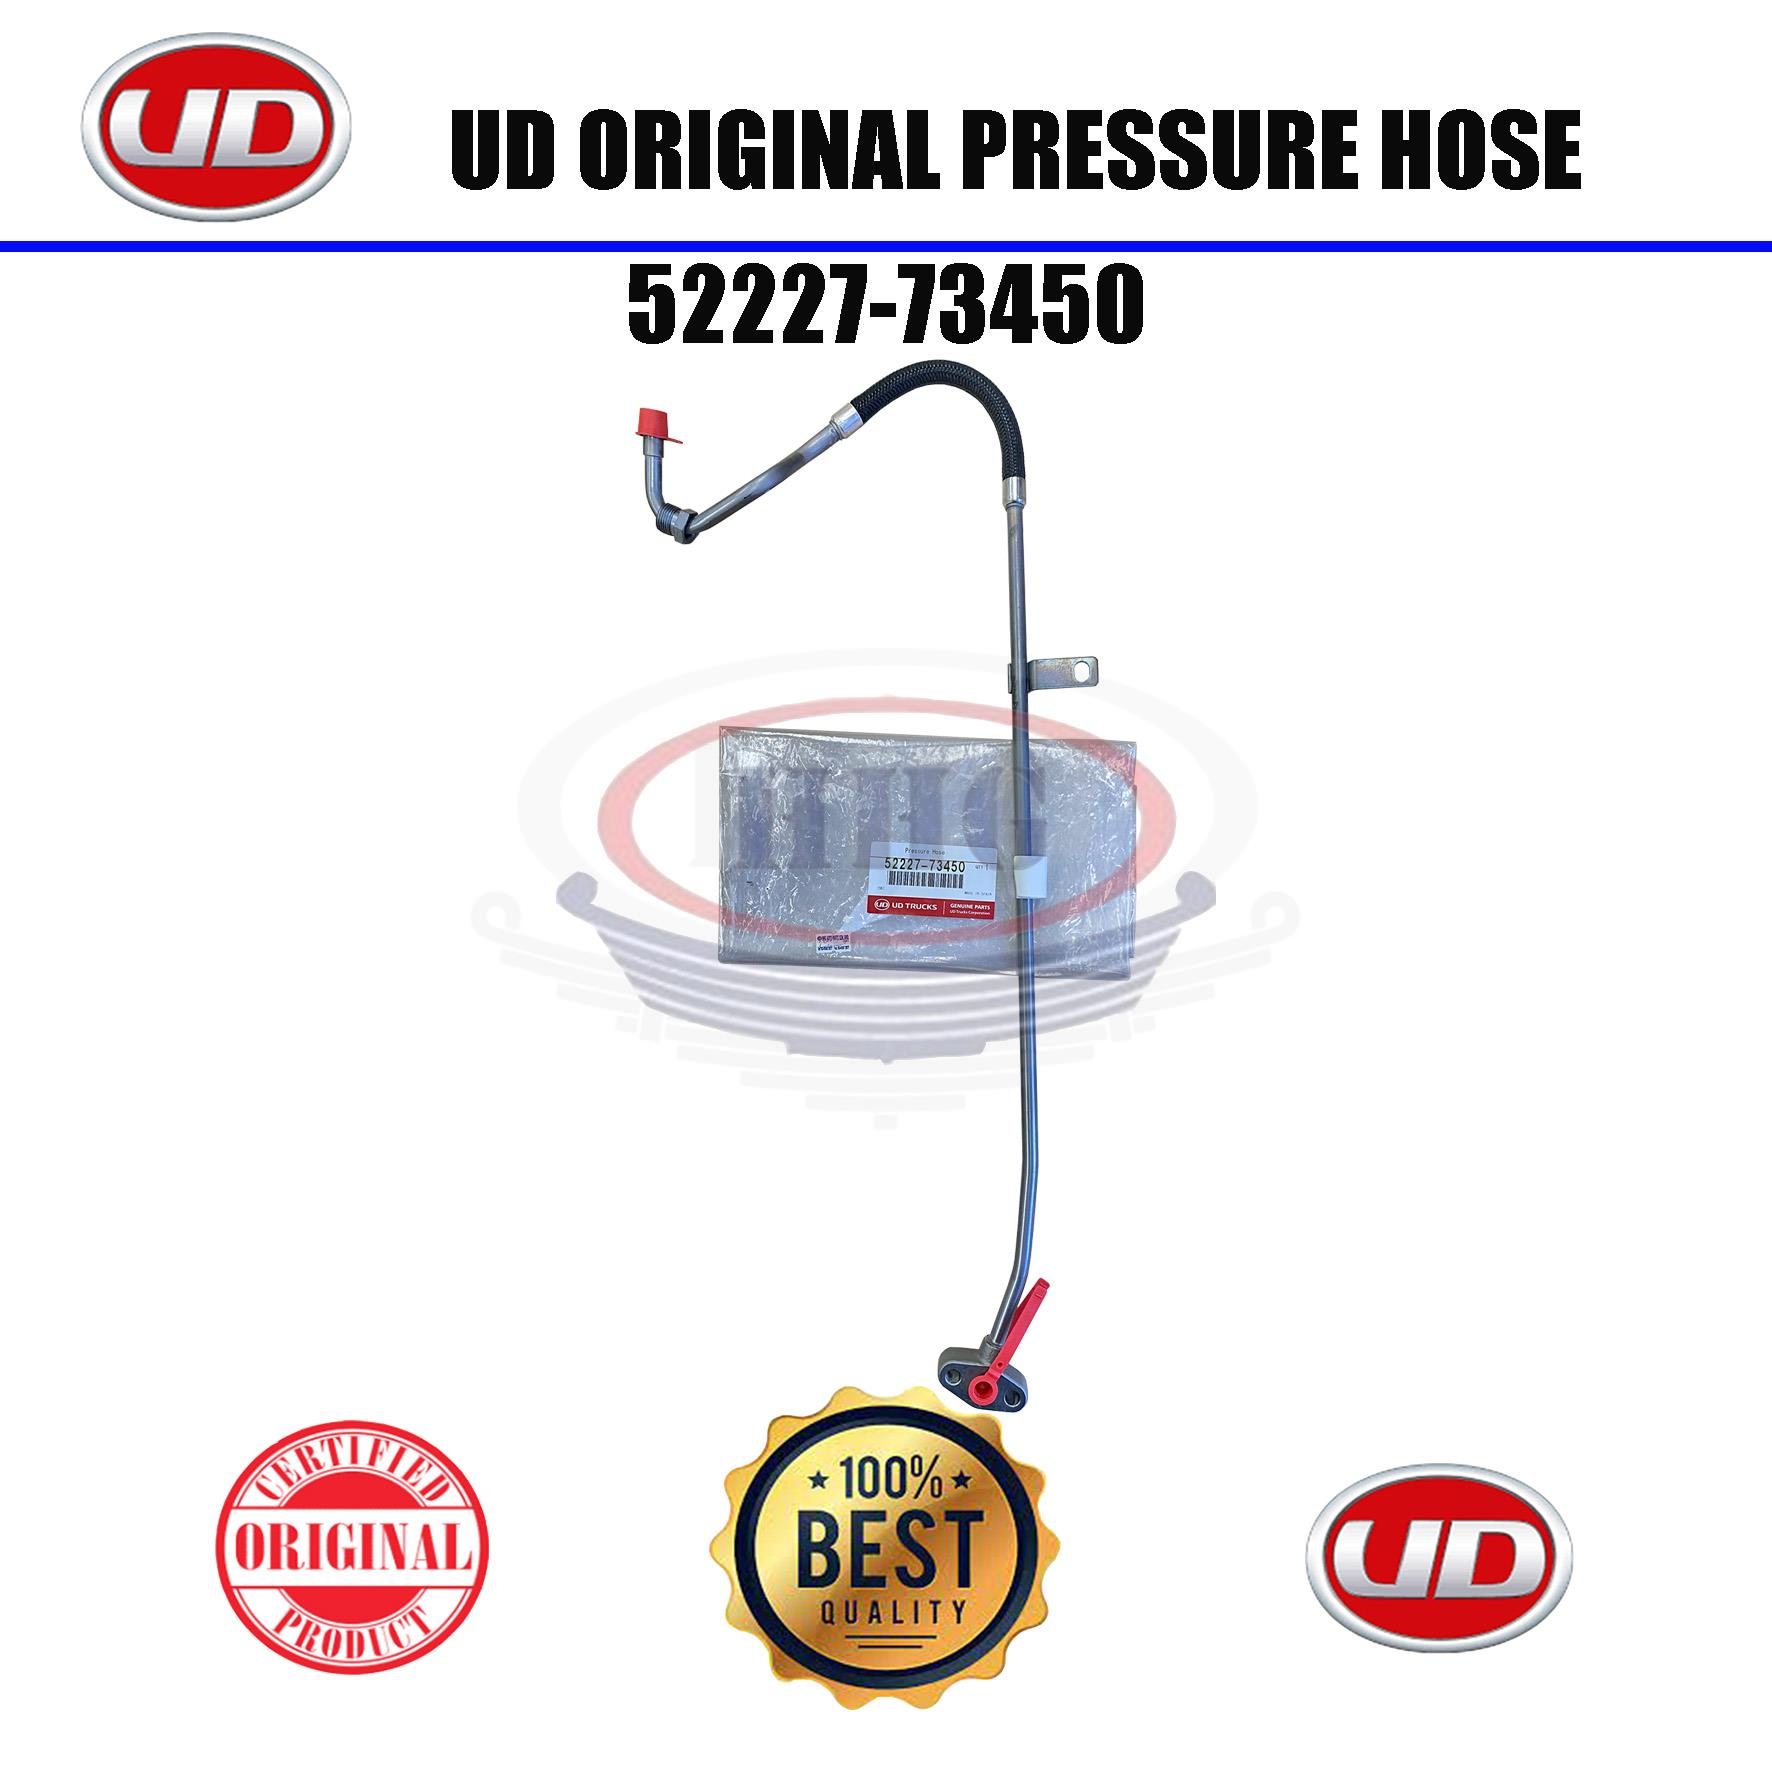 UD Original GH11 Pressure Hose (52227-73450)